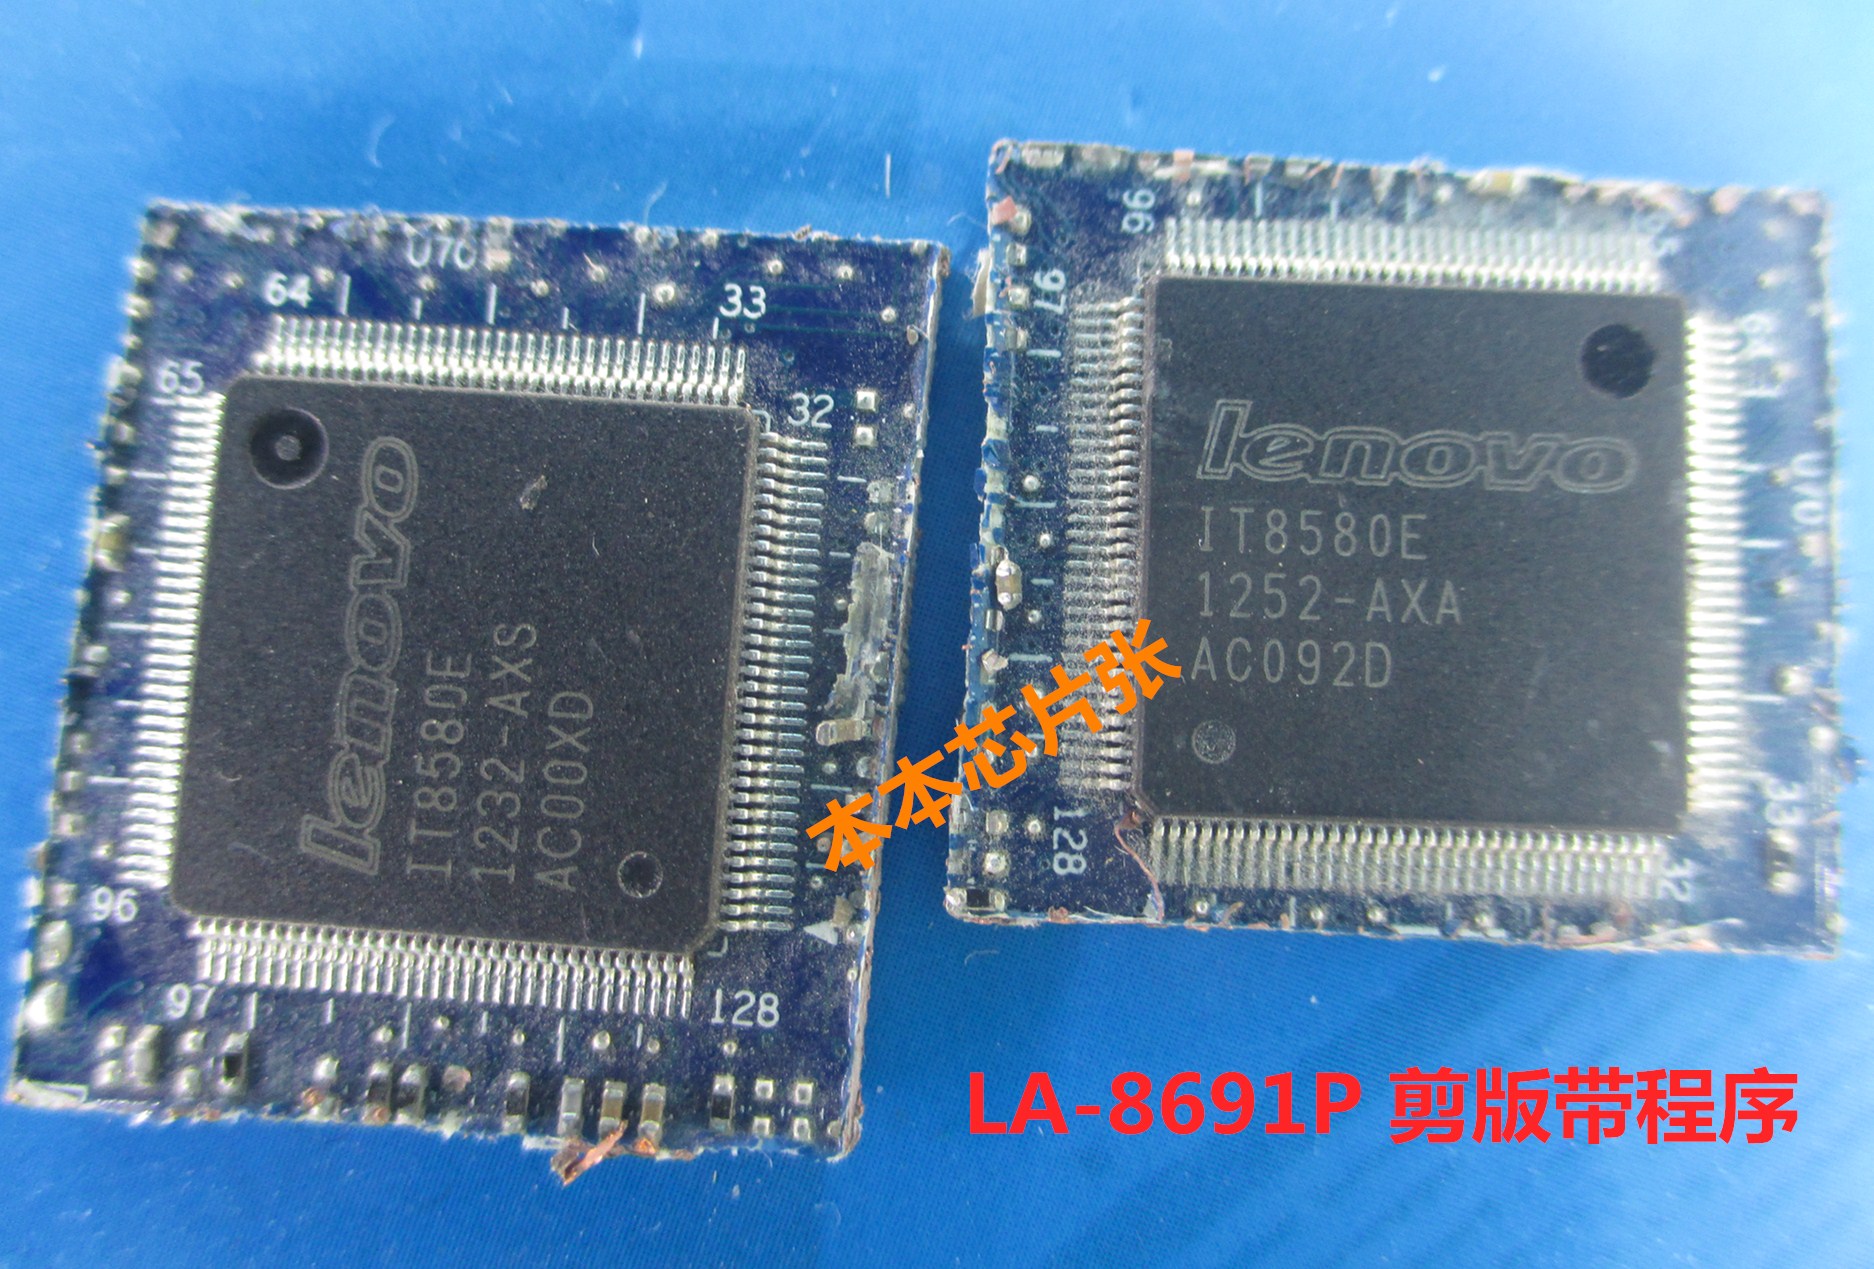 聯想Lenovo Y400 LA-8691P IT8580E 剪版帶程序開機IO EC芯片